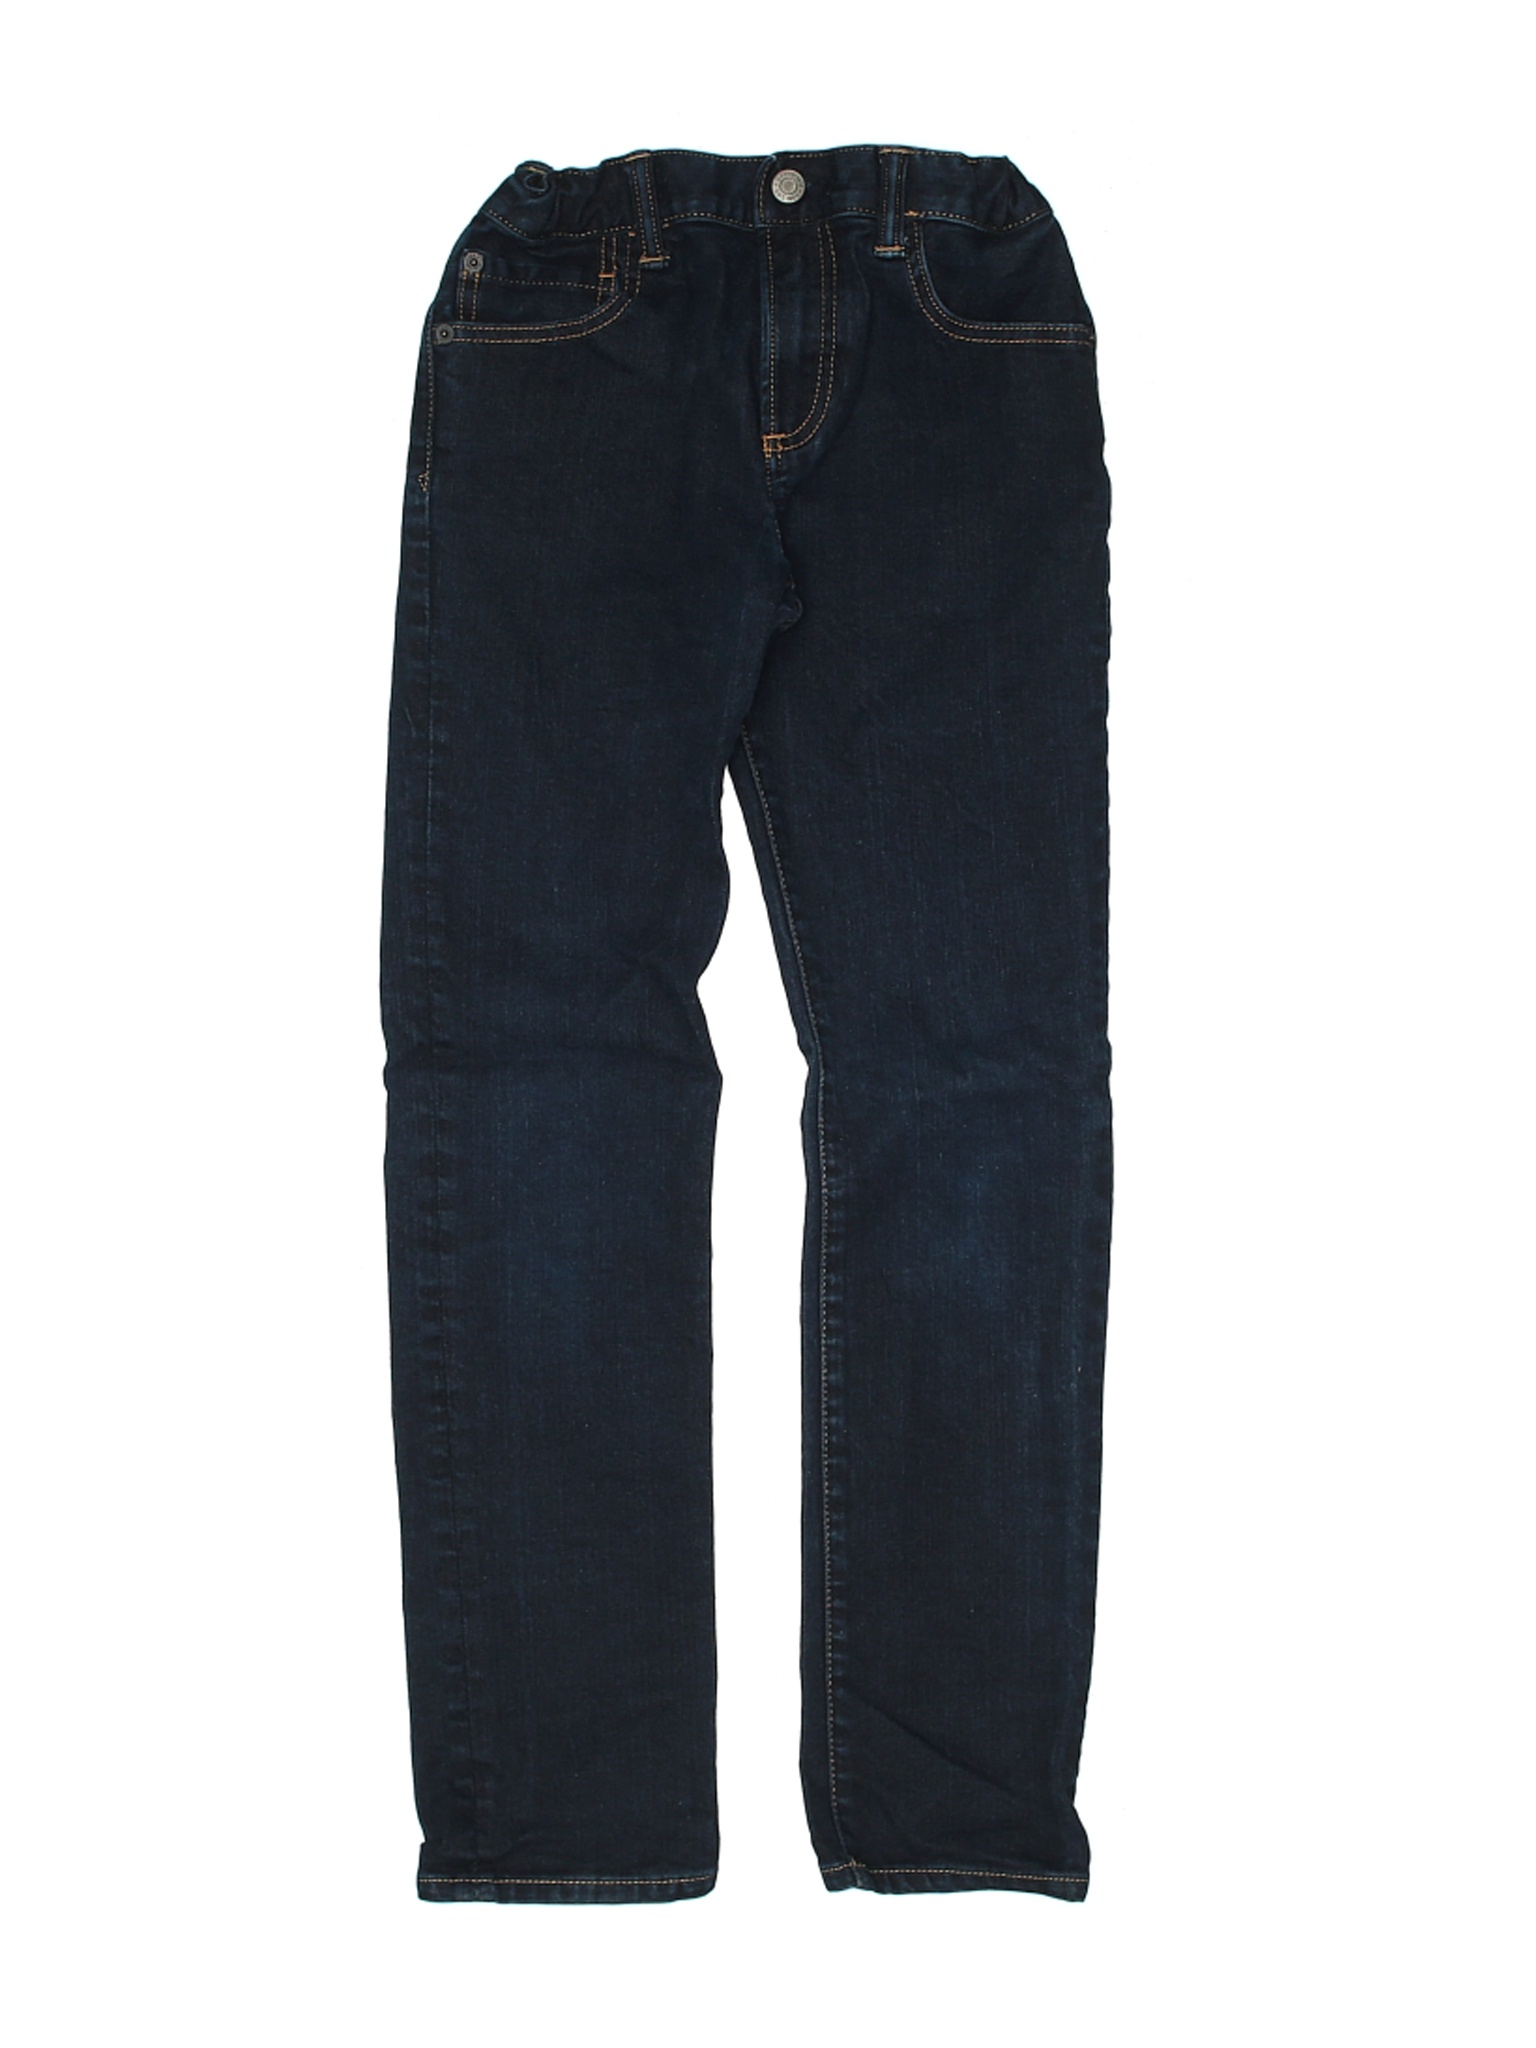 Gap Kids Boys Black Jeans 12 | eBay